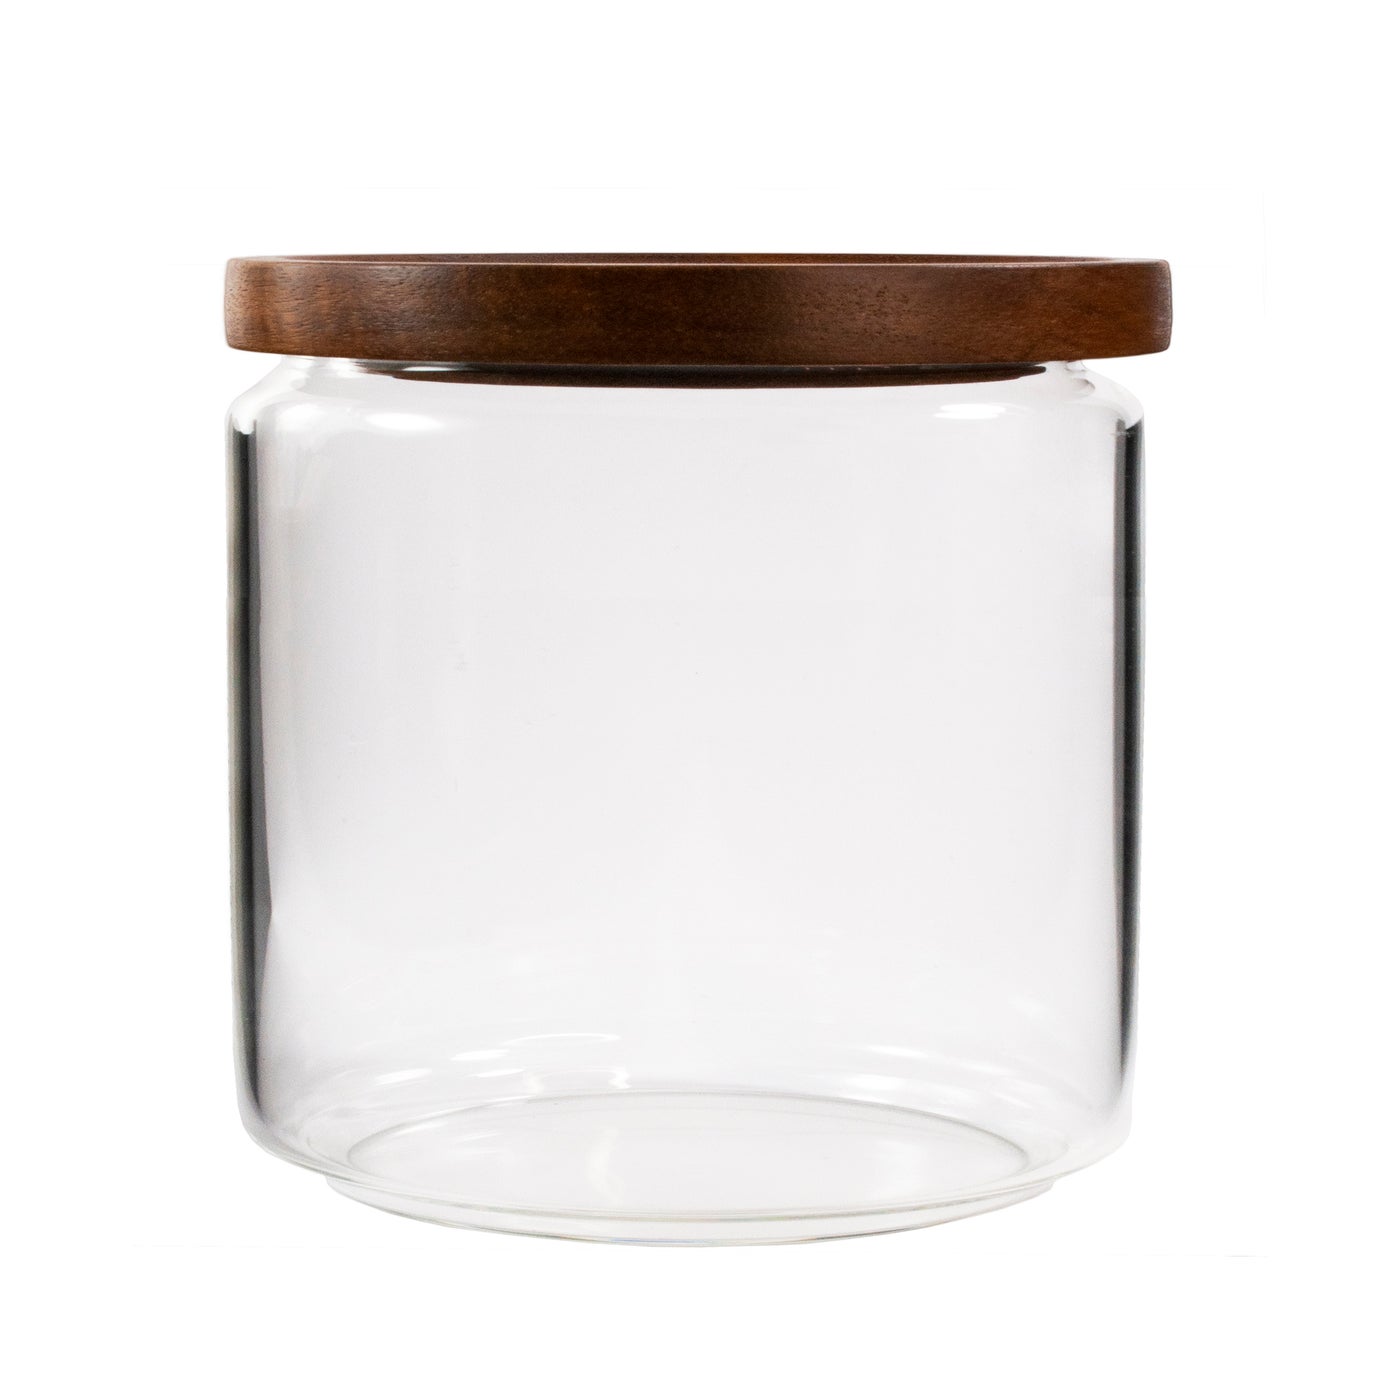 Large Capacity Food Storage High Borosilicate Glass Jar With Acacia Lids -  Buy Large Capacity Food Storage High Borosilicate Glass Jar With Acacia  Lids Product on